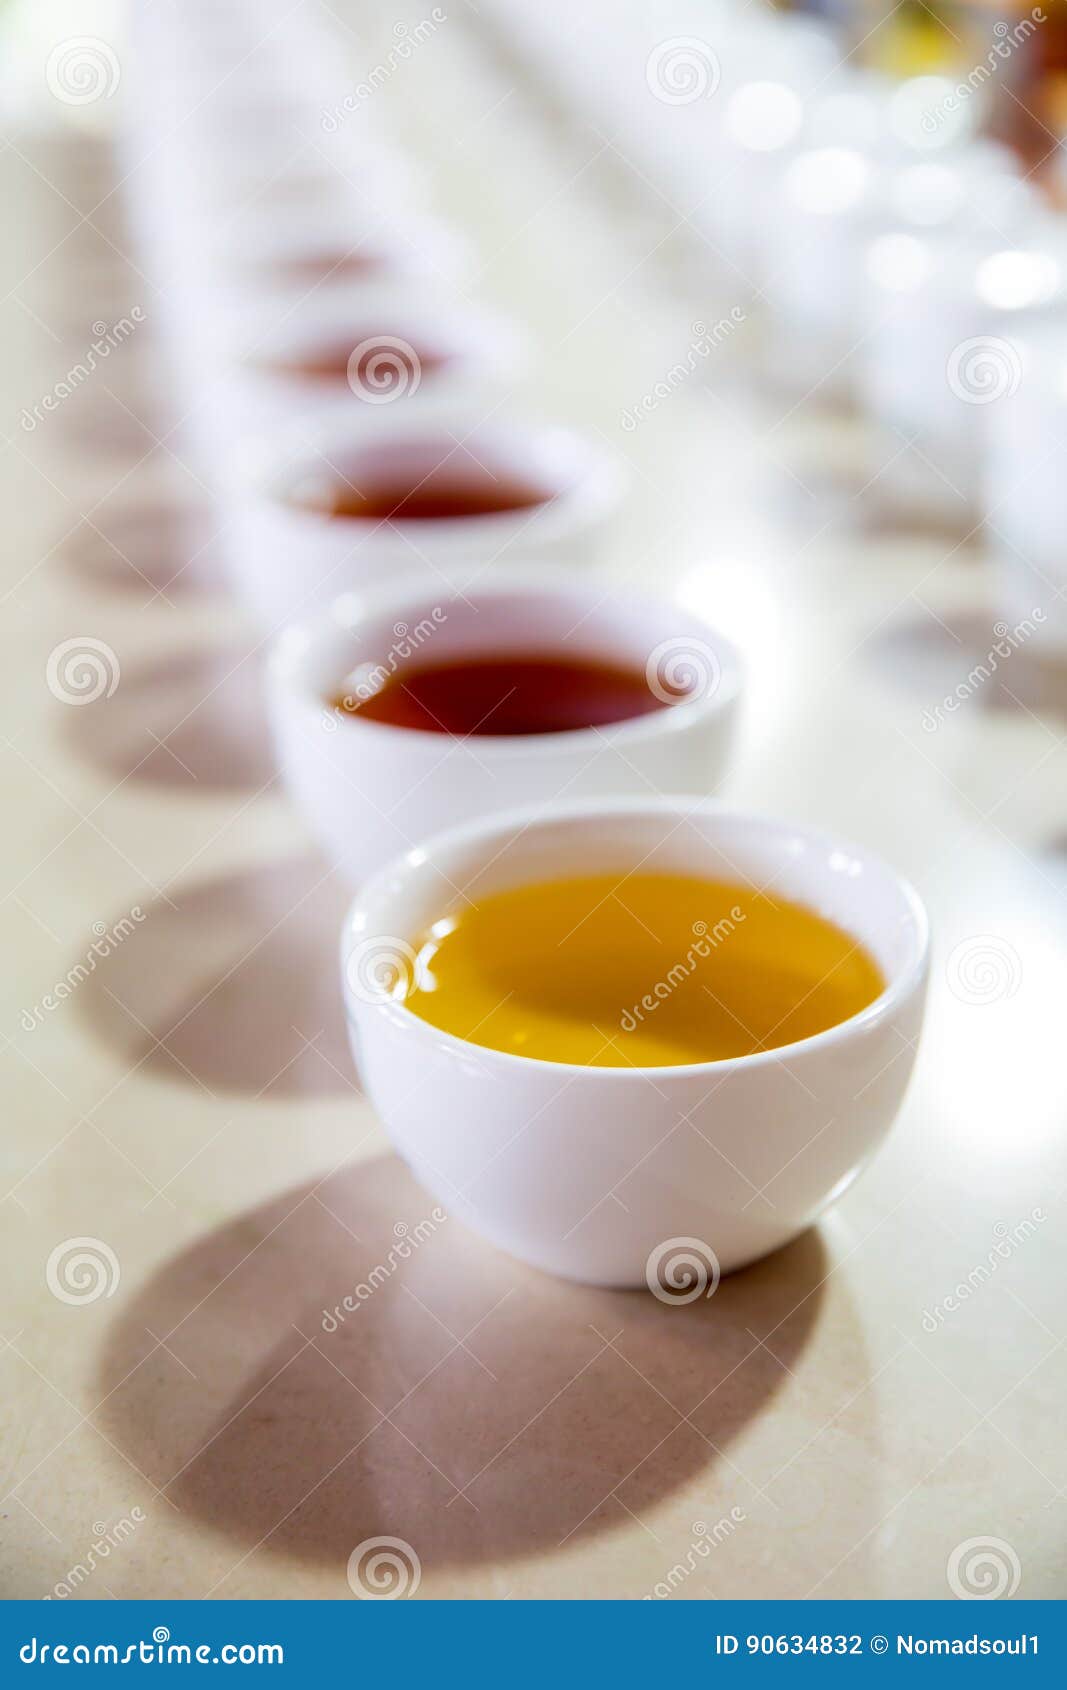 ceylon tea degustation cups closeup view